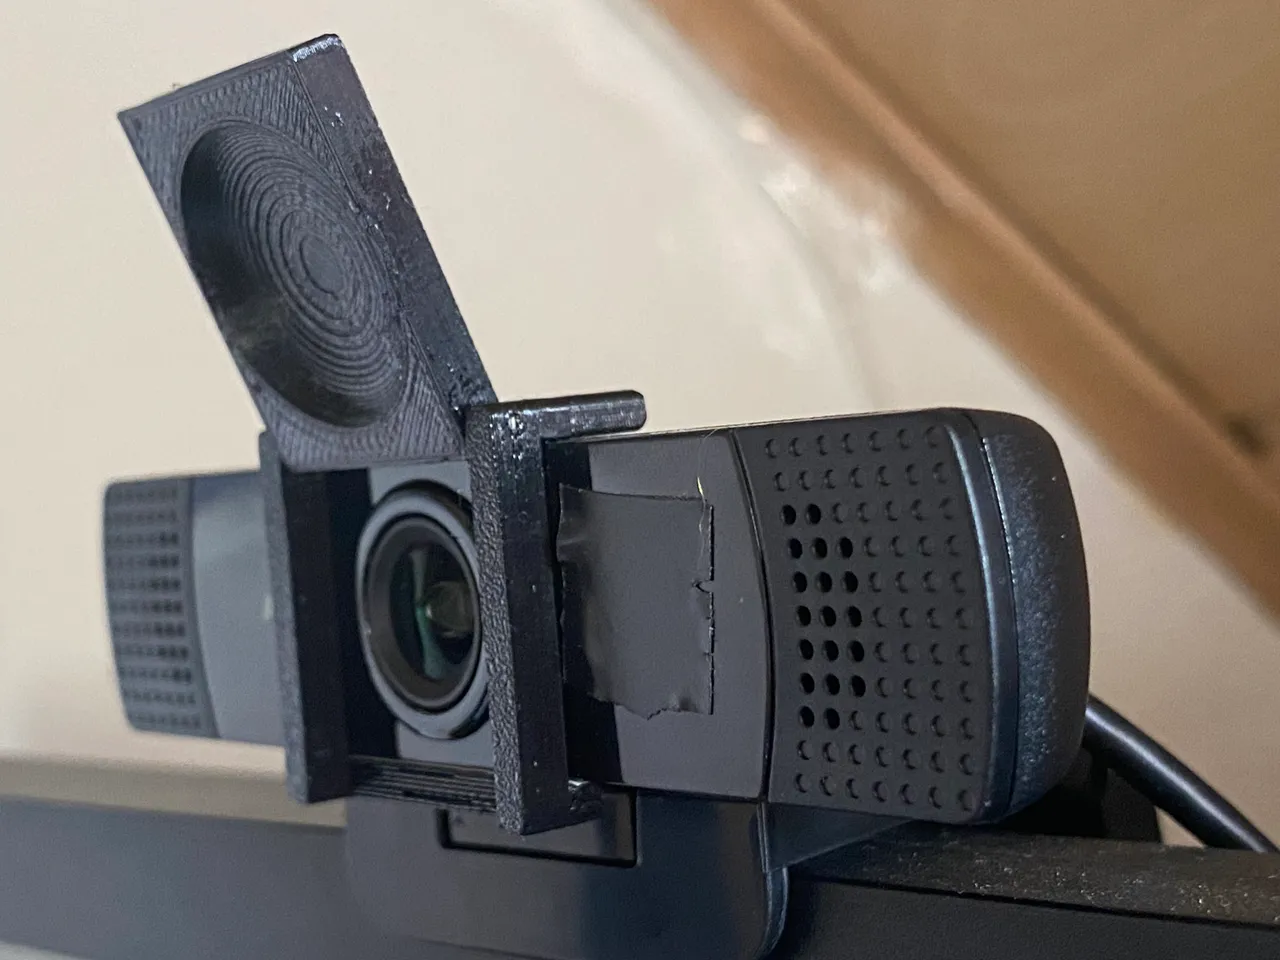 Webcam HD Spy Protect